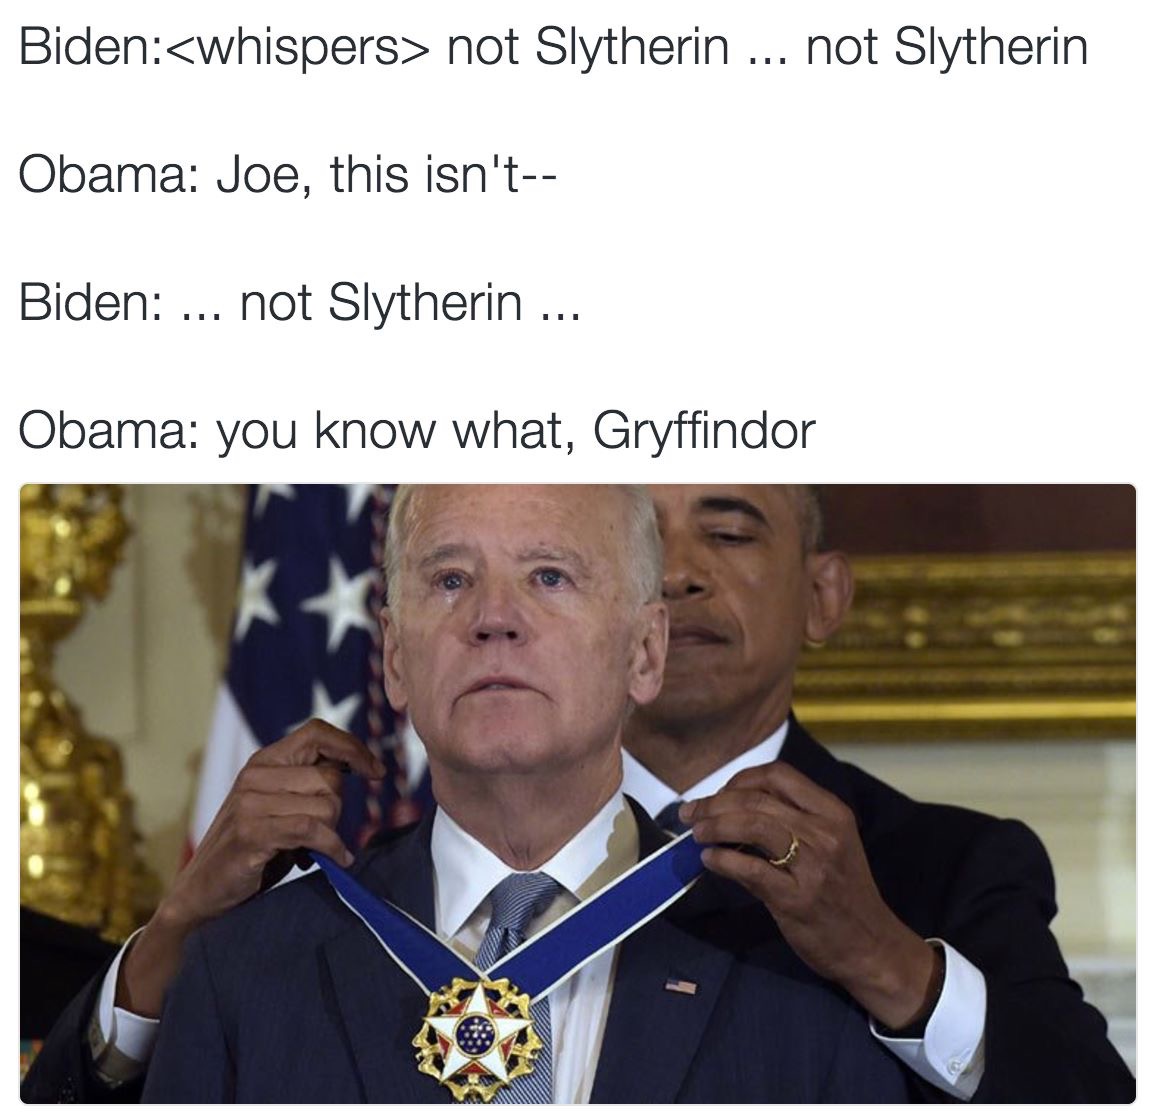 joe biden harry potter meme - Biden not Slytherin ... not Slytherin Obama Joe, this isn't Biden ... not Slytherin ... Obama you know what, Gryffindor